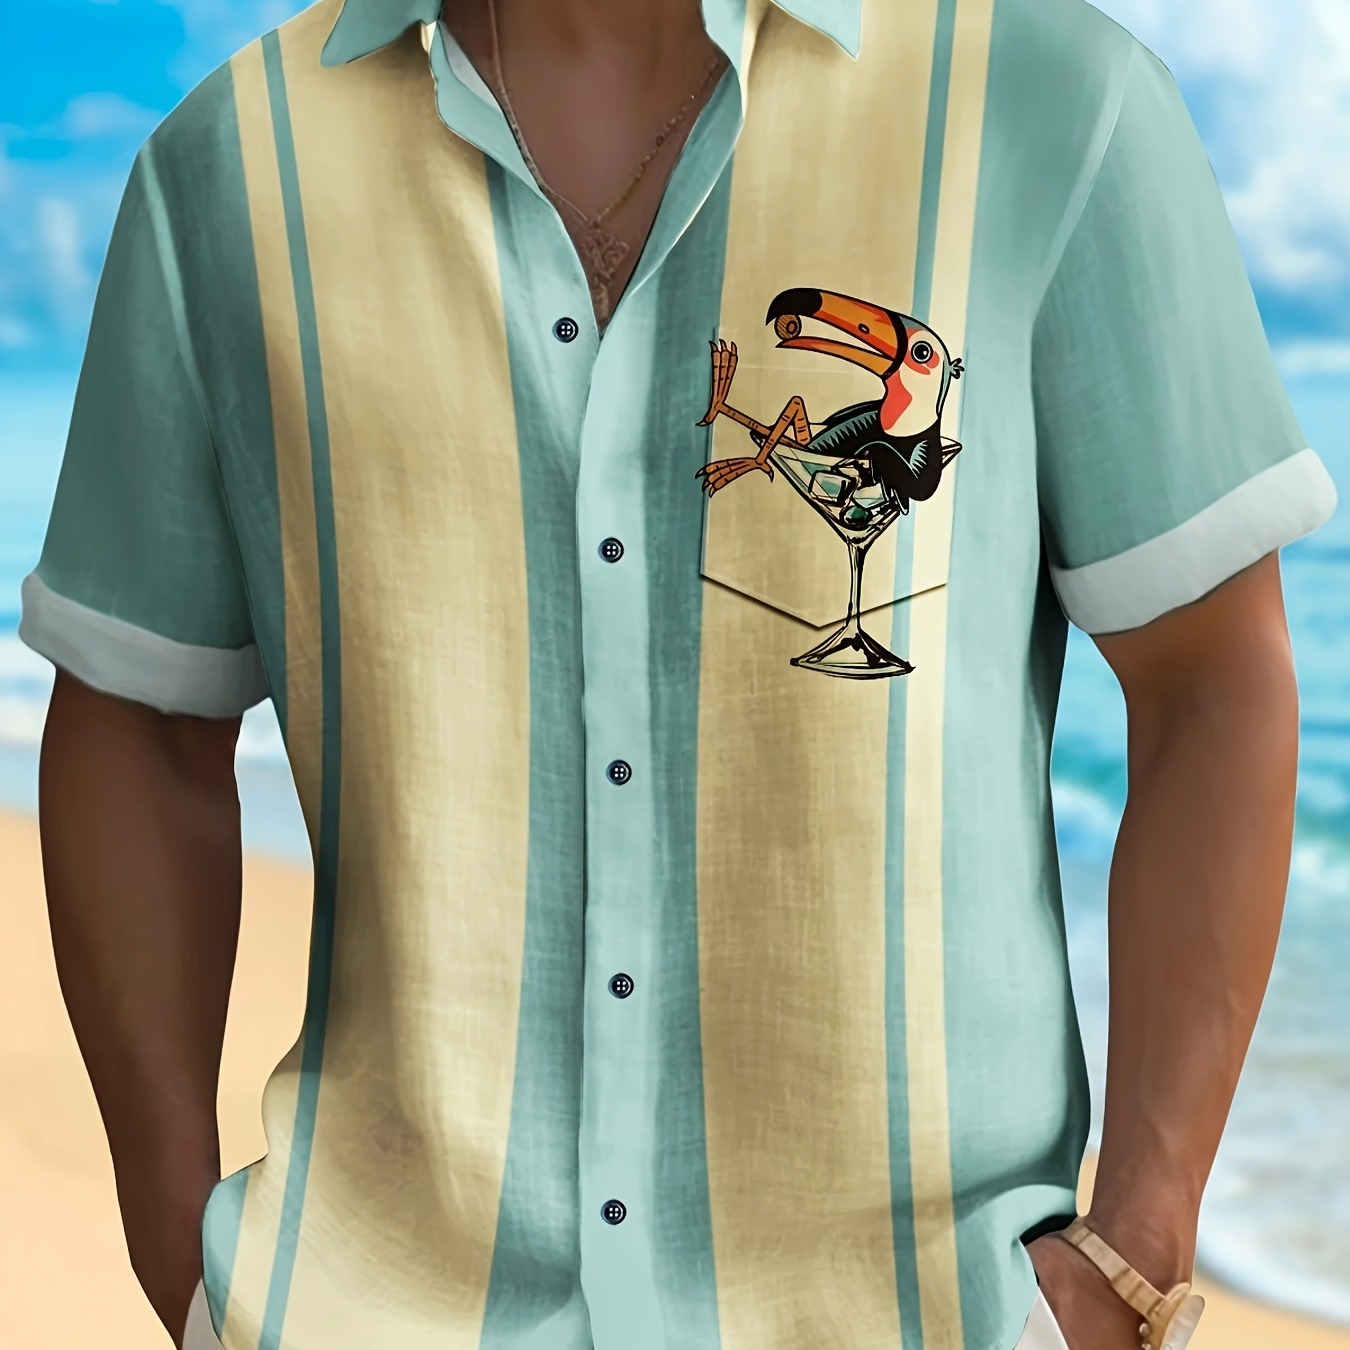 

Men's Casual Beach Hawaiian Shirt, Fashionable Striped Print With Tropical Toucan, Short Sleeve, Summer Attire